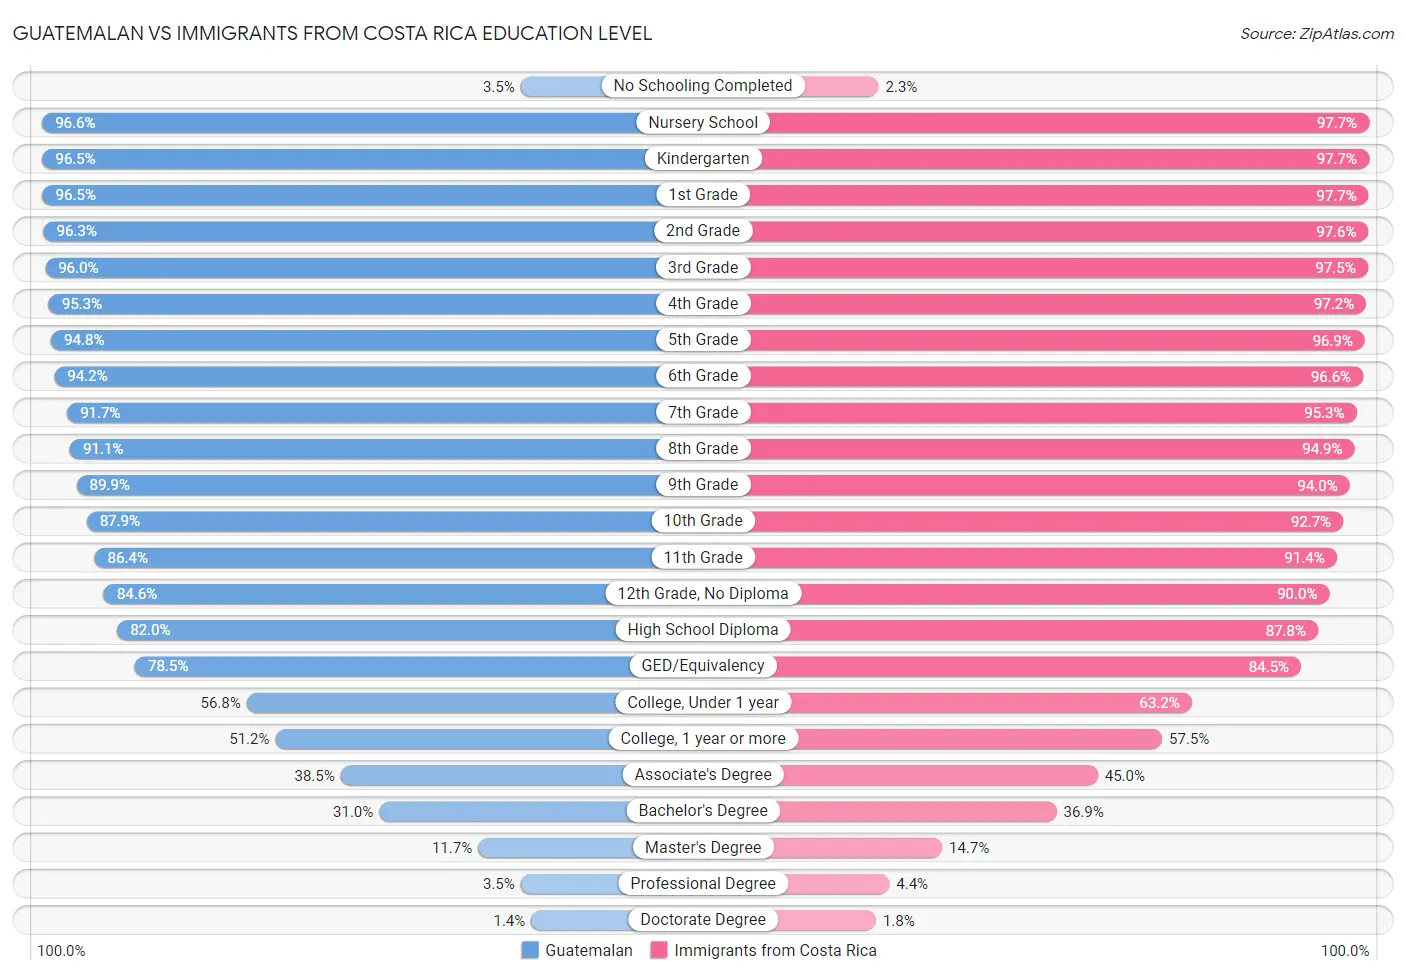 Guatemalan vs Immigrants from Costa Rica Education Level